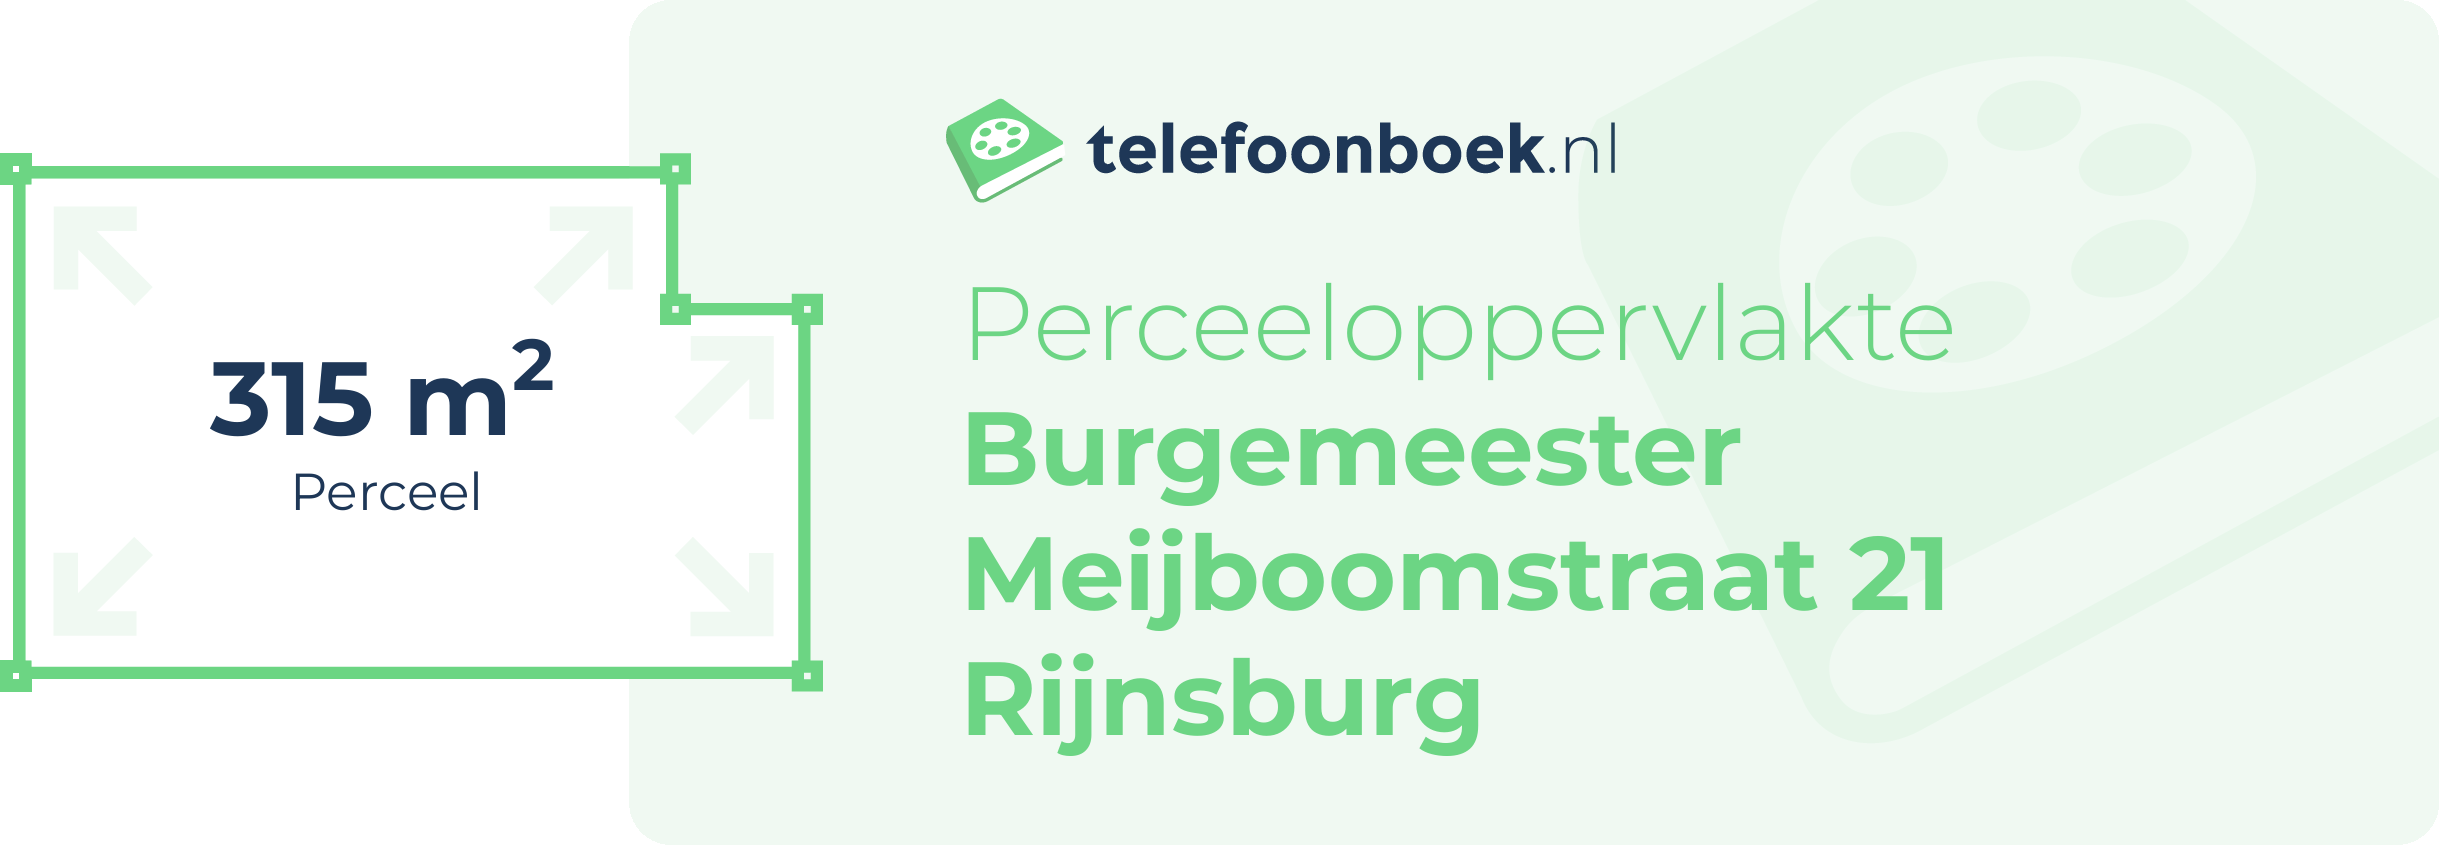 Perceeloppervlakte Burgemeester Meijboomstraat 21 Rijnsburg